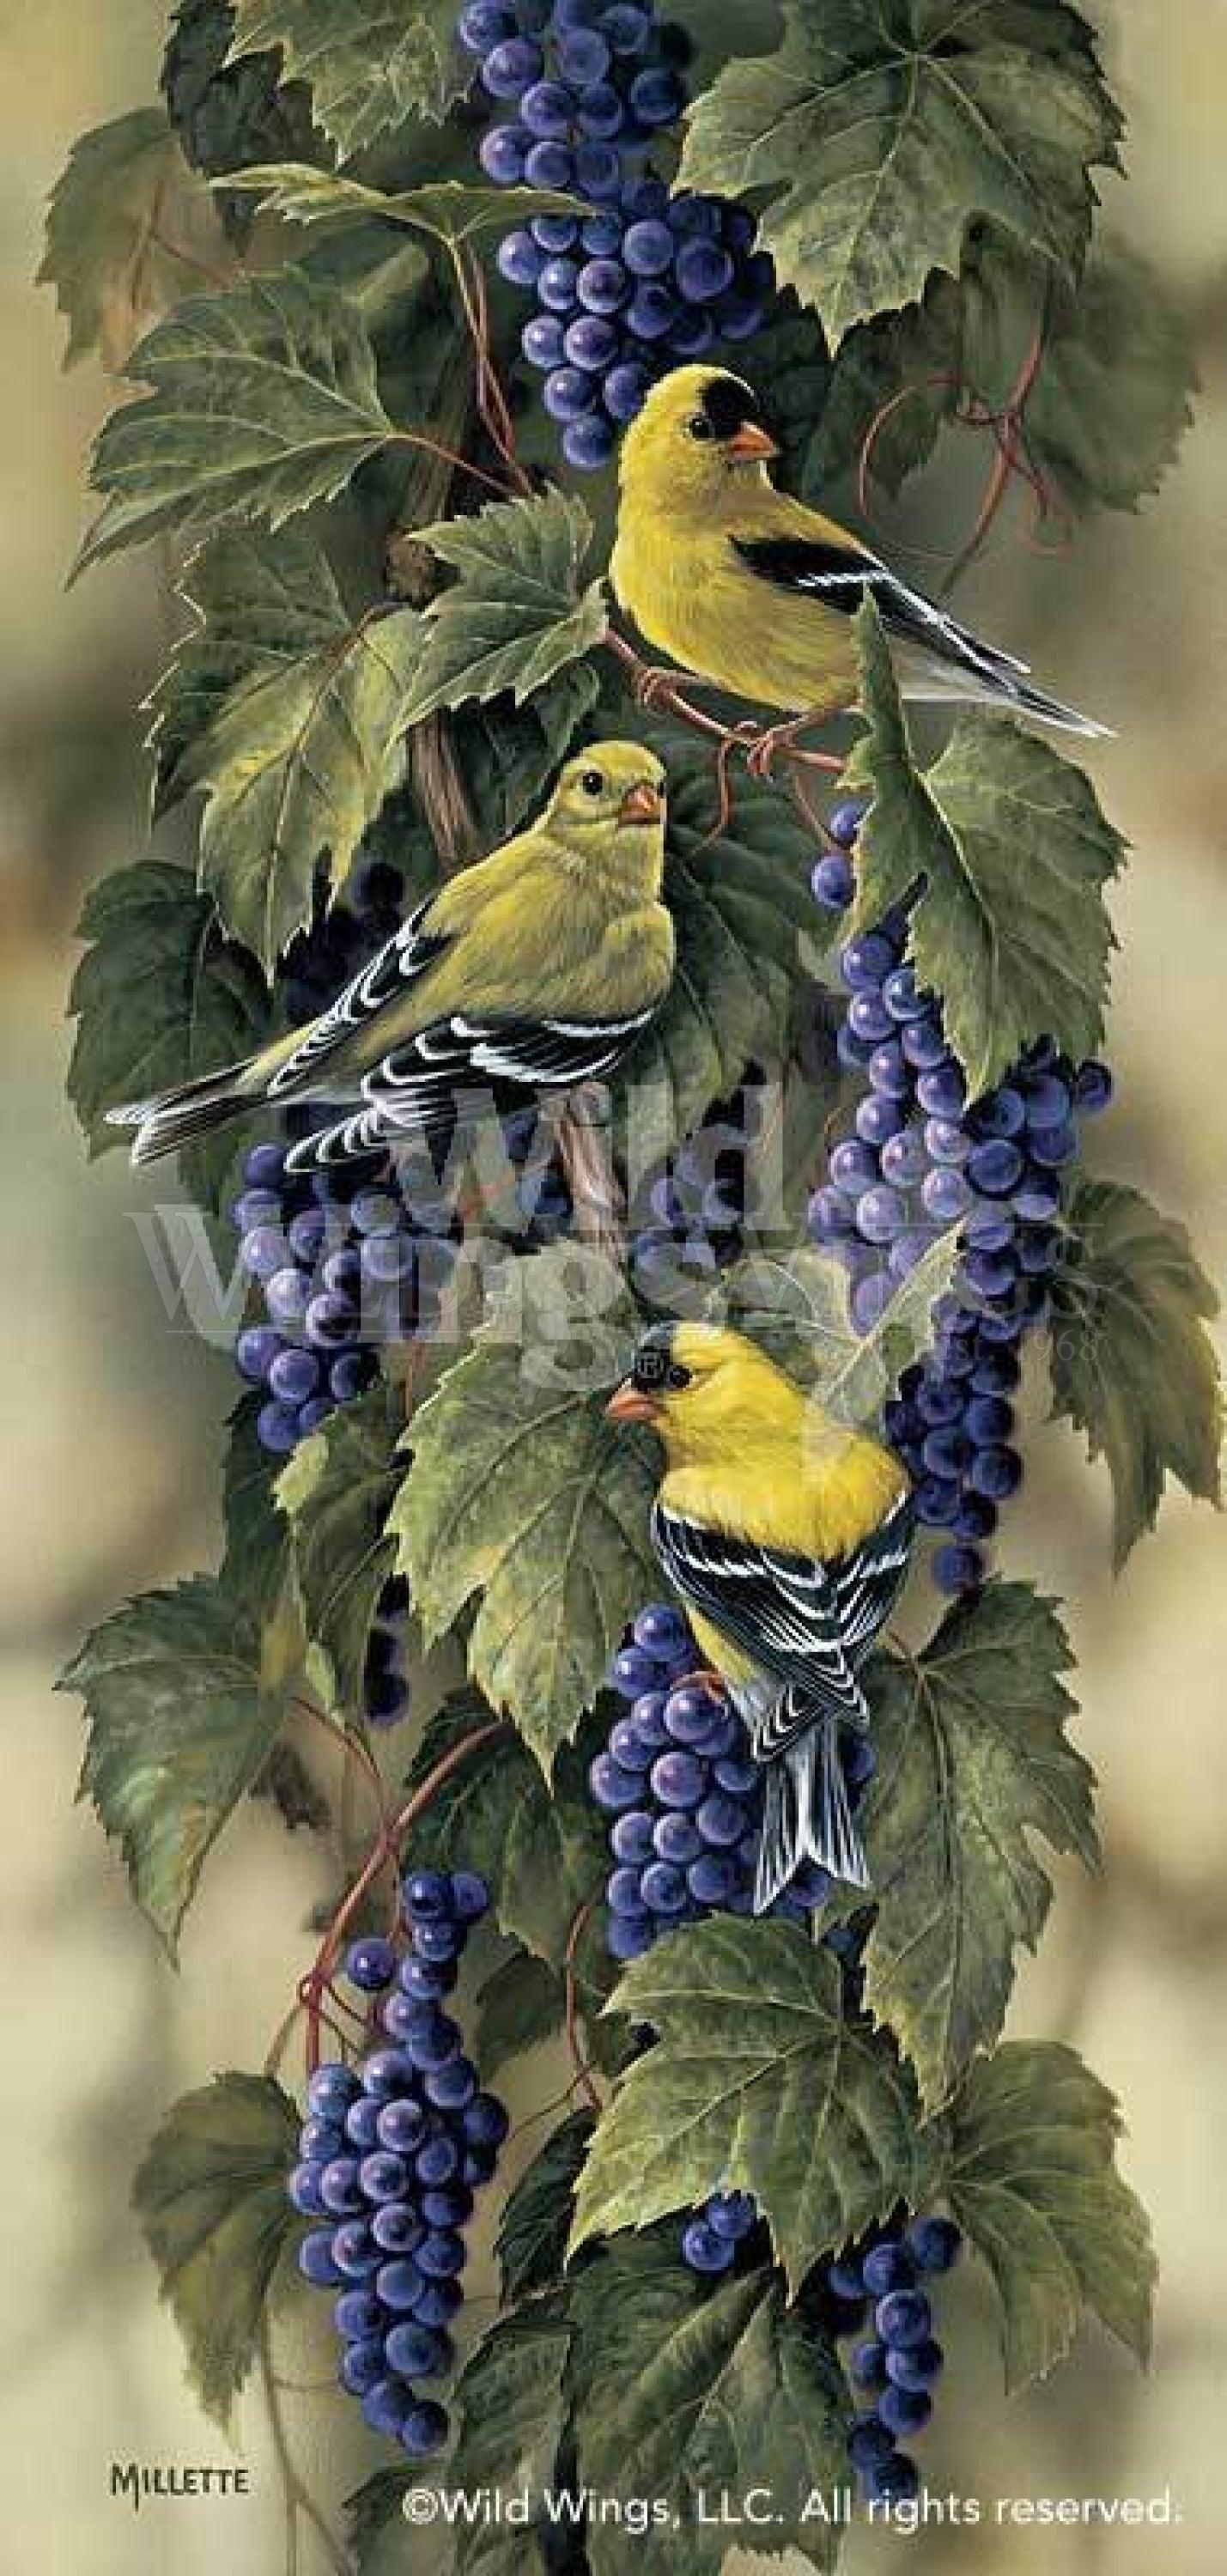 vineyardmdashgoldfinch-limited-edition-print21h-x-10w-art-collection_543.jpg